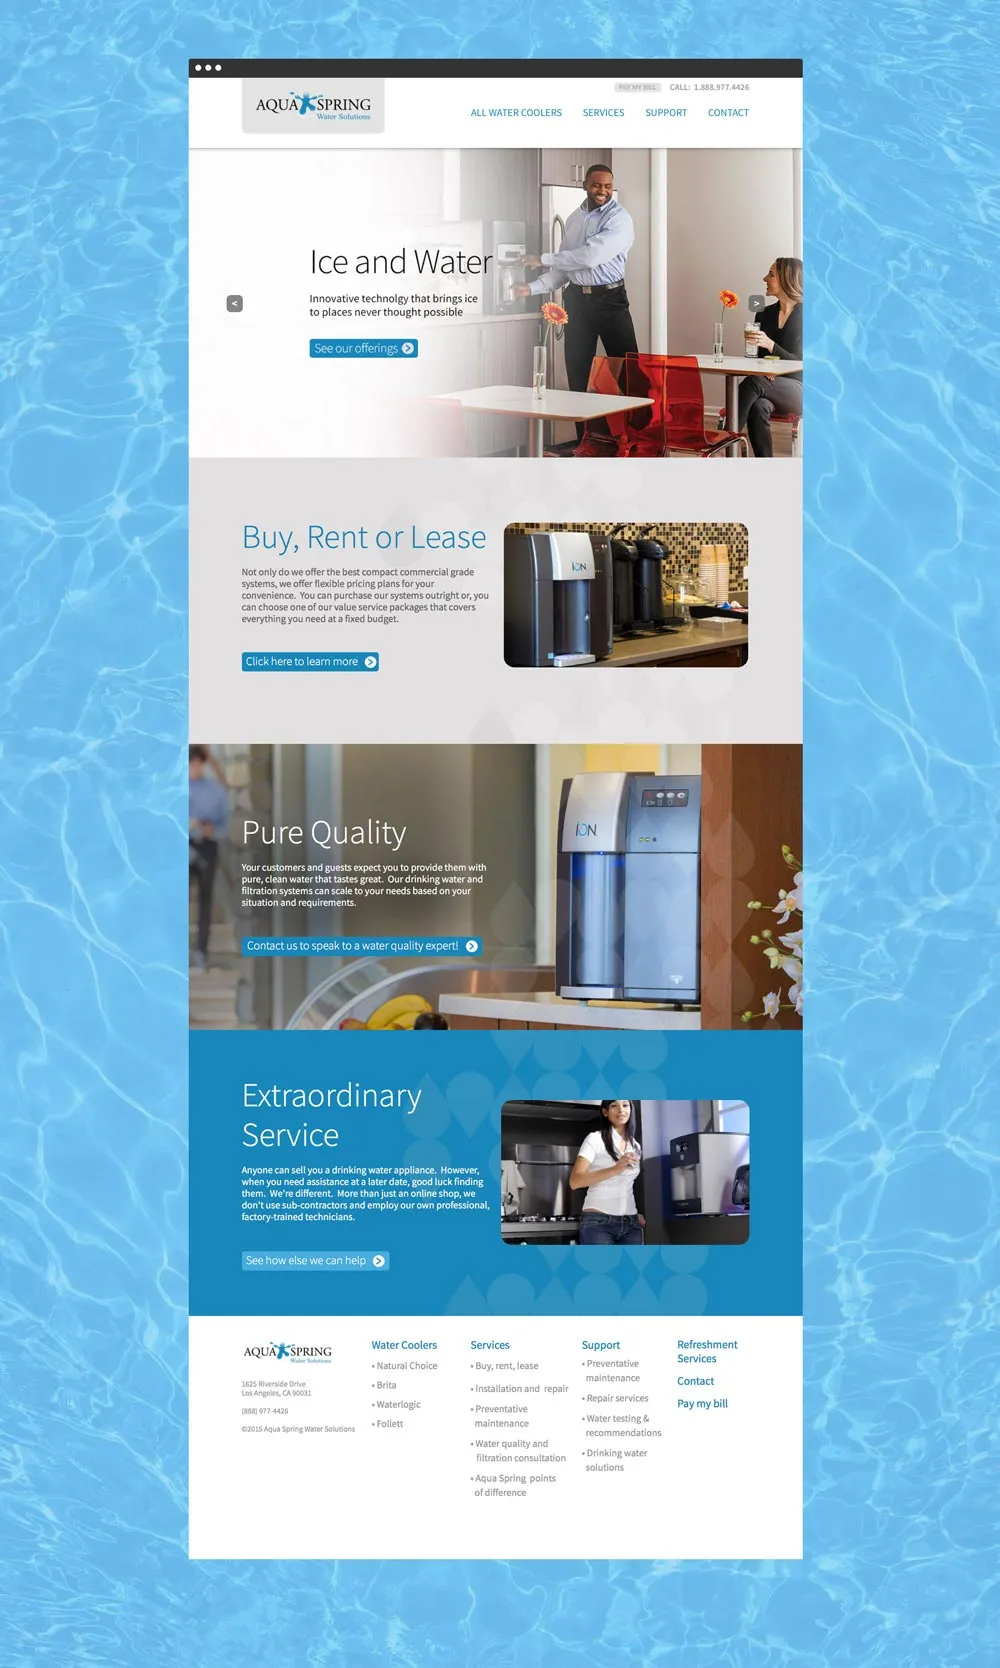 Aqua Spring - Home page full